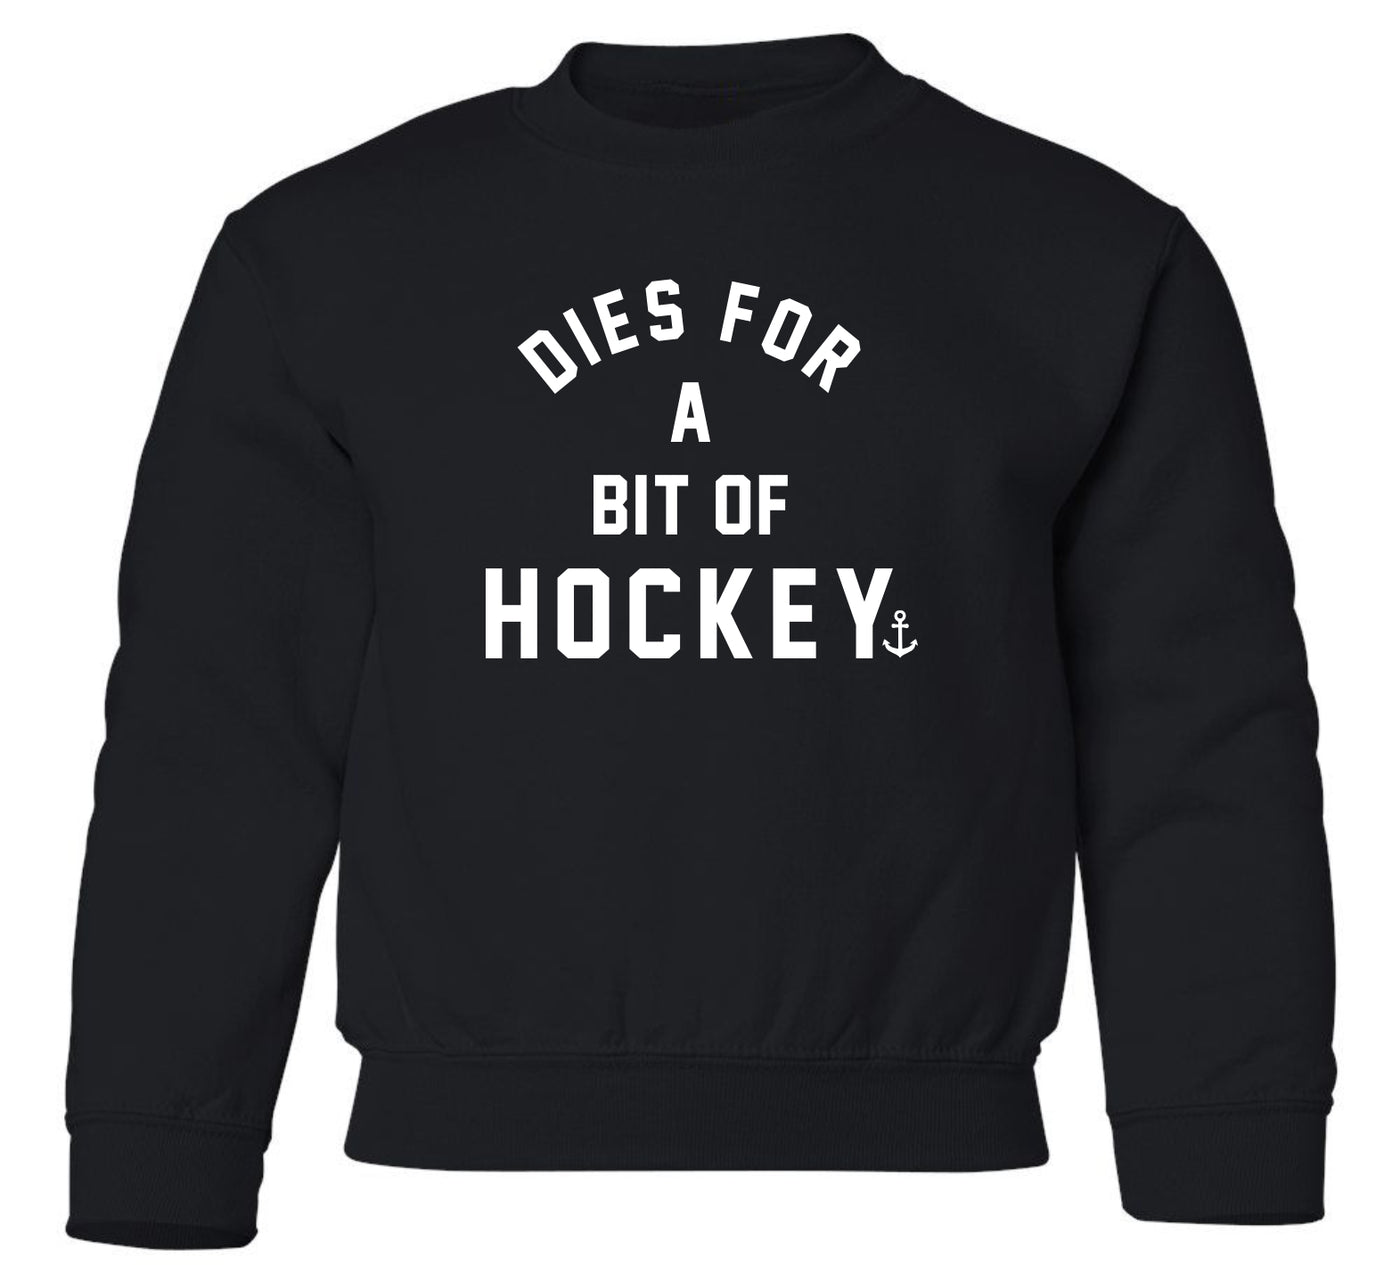 "Dies For A Bit Of Hockey" Toddler/Youth Crewneck Sweatshirt